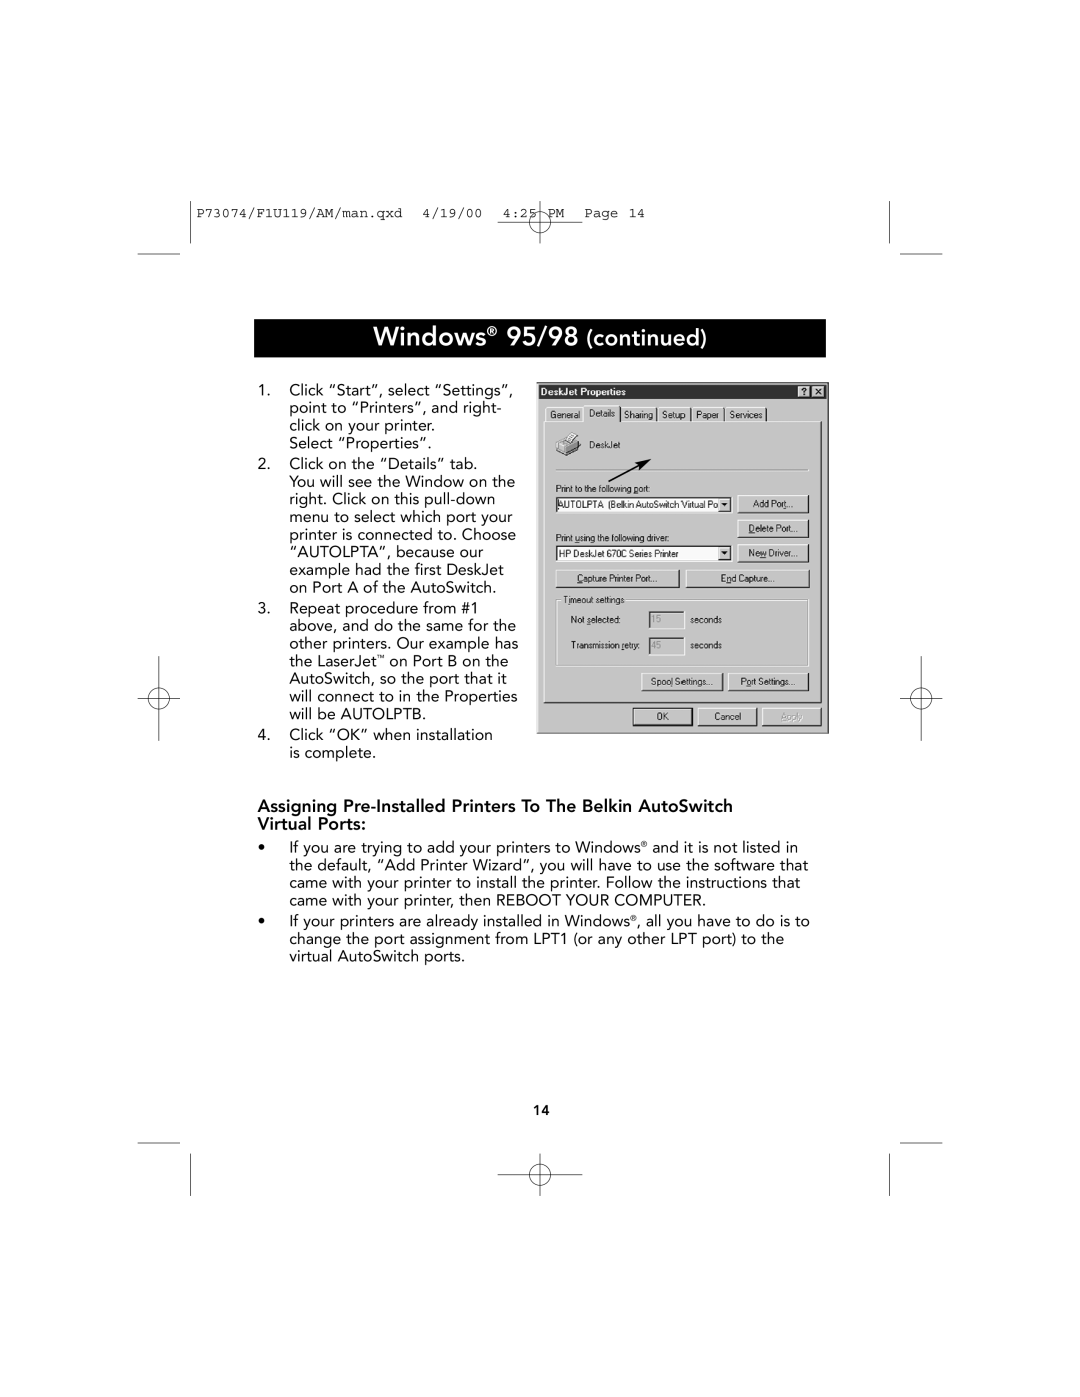 Belkin F1U119 user manual Windows 95/98 continued 